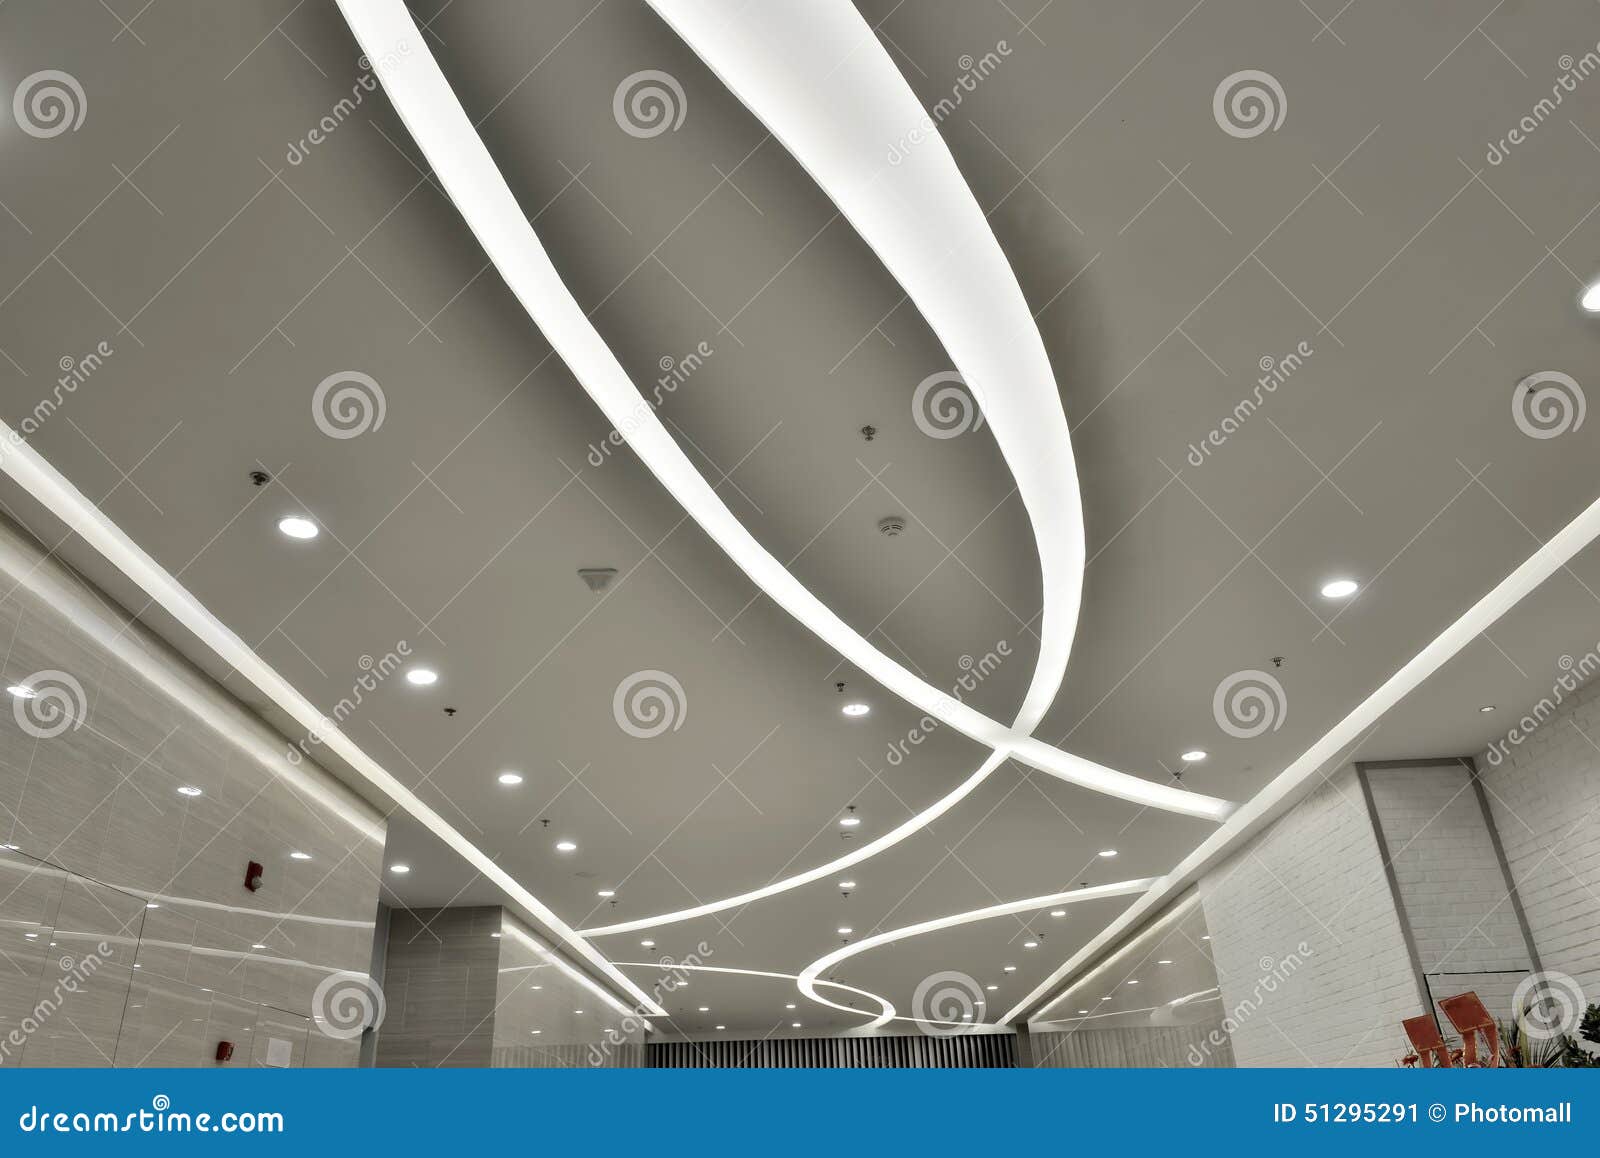 led ceiling of modern plaza hall